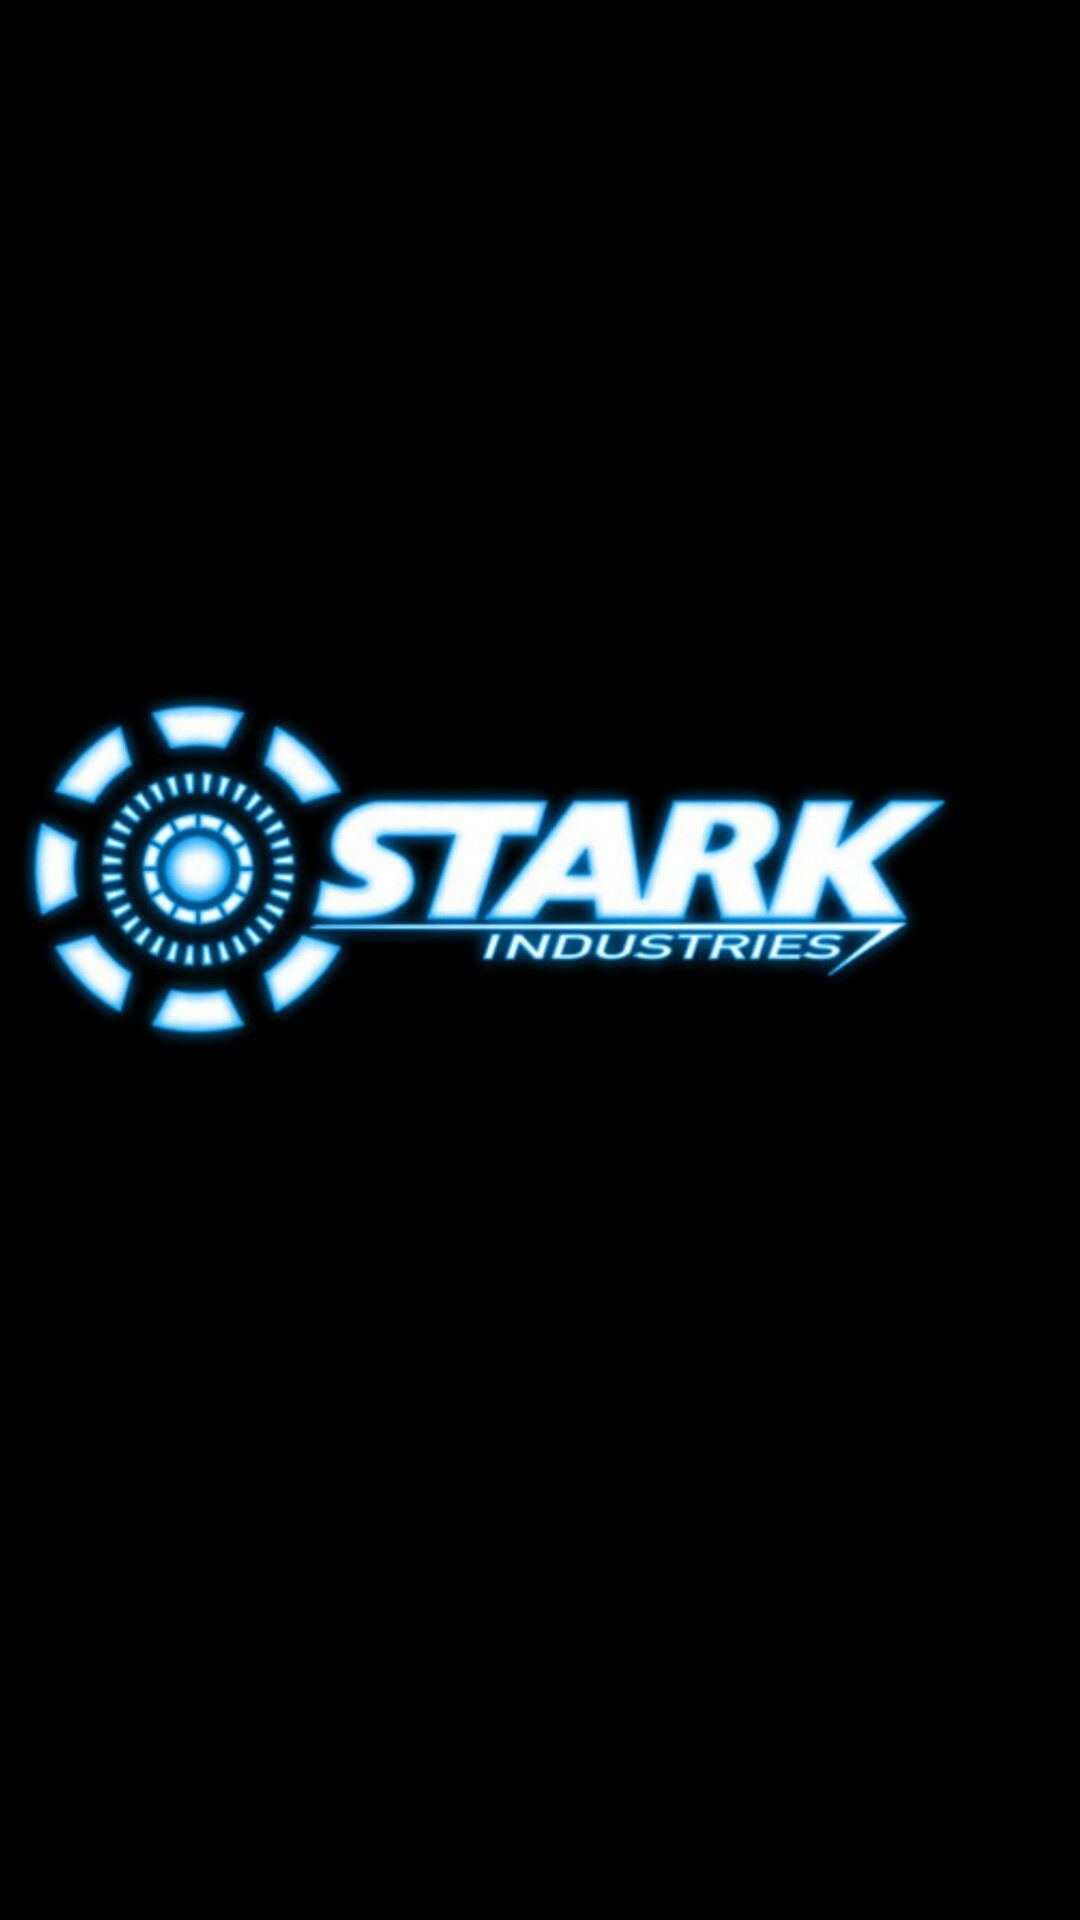 Stark Industries wallpaper. Stark industries, Stark, Vehicle logos